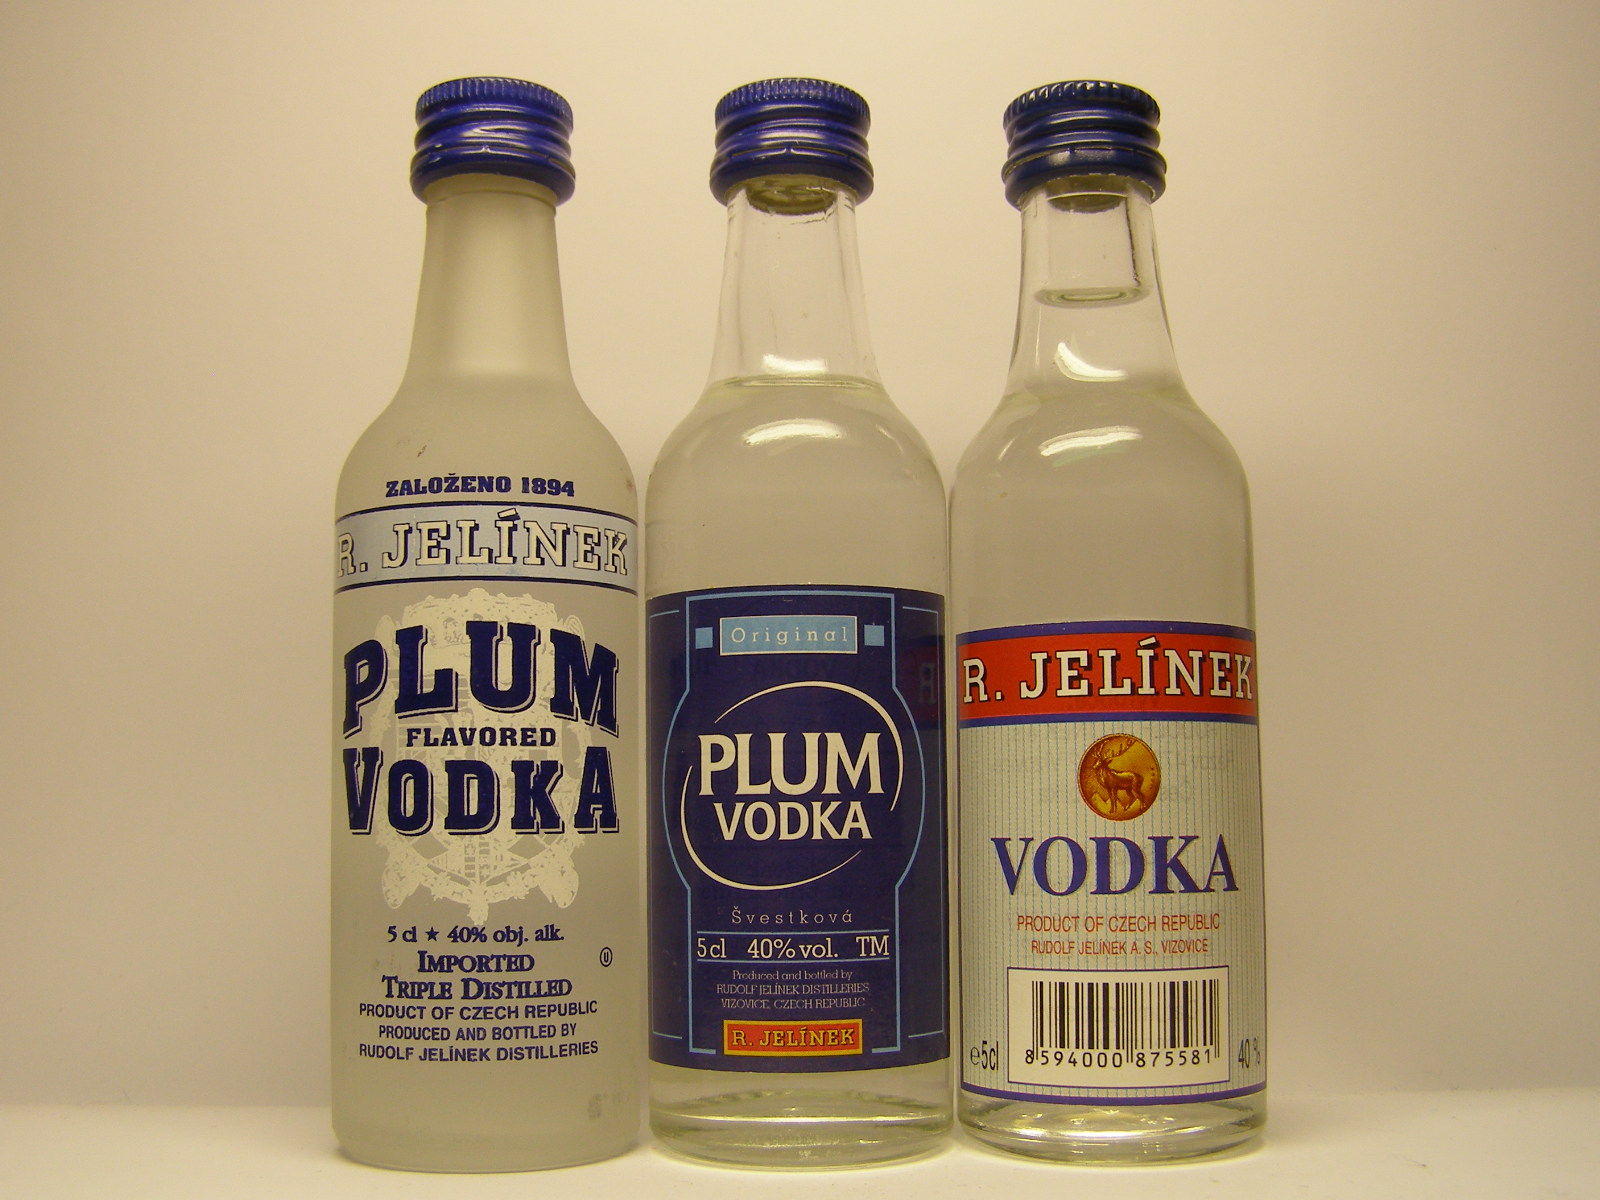 R.JELINEK Plum Vodka - Vodka